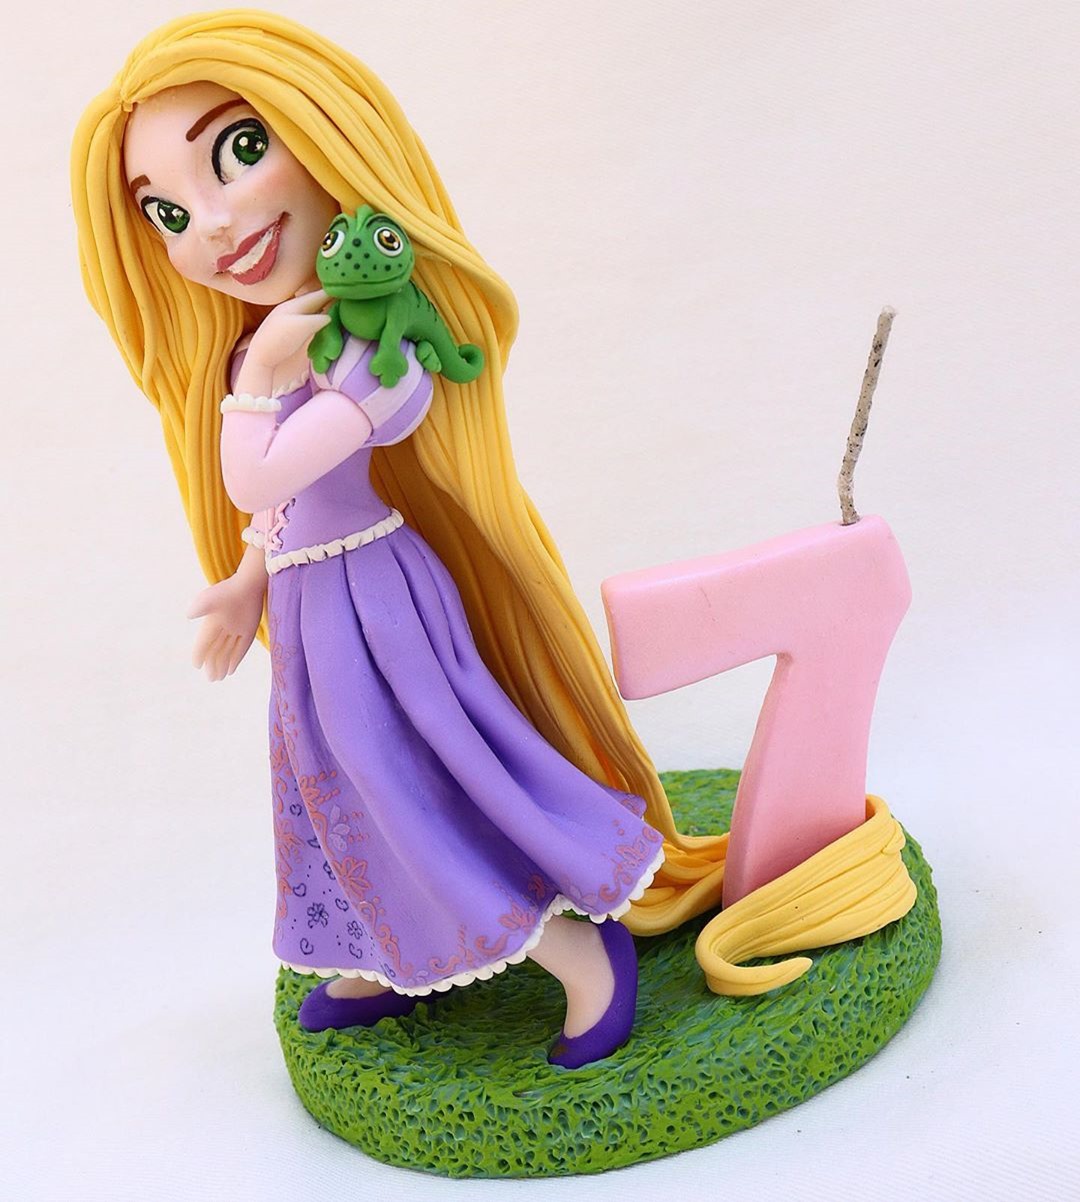 Tangled Rapunzel Cake How to Make a Disney Princess Rapunzel Doll Cake -  YouTube